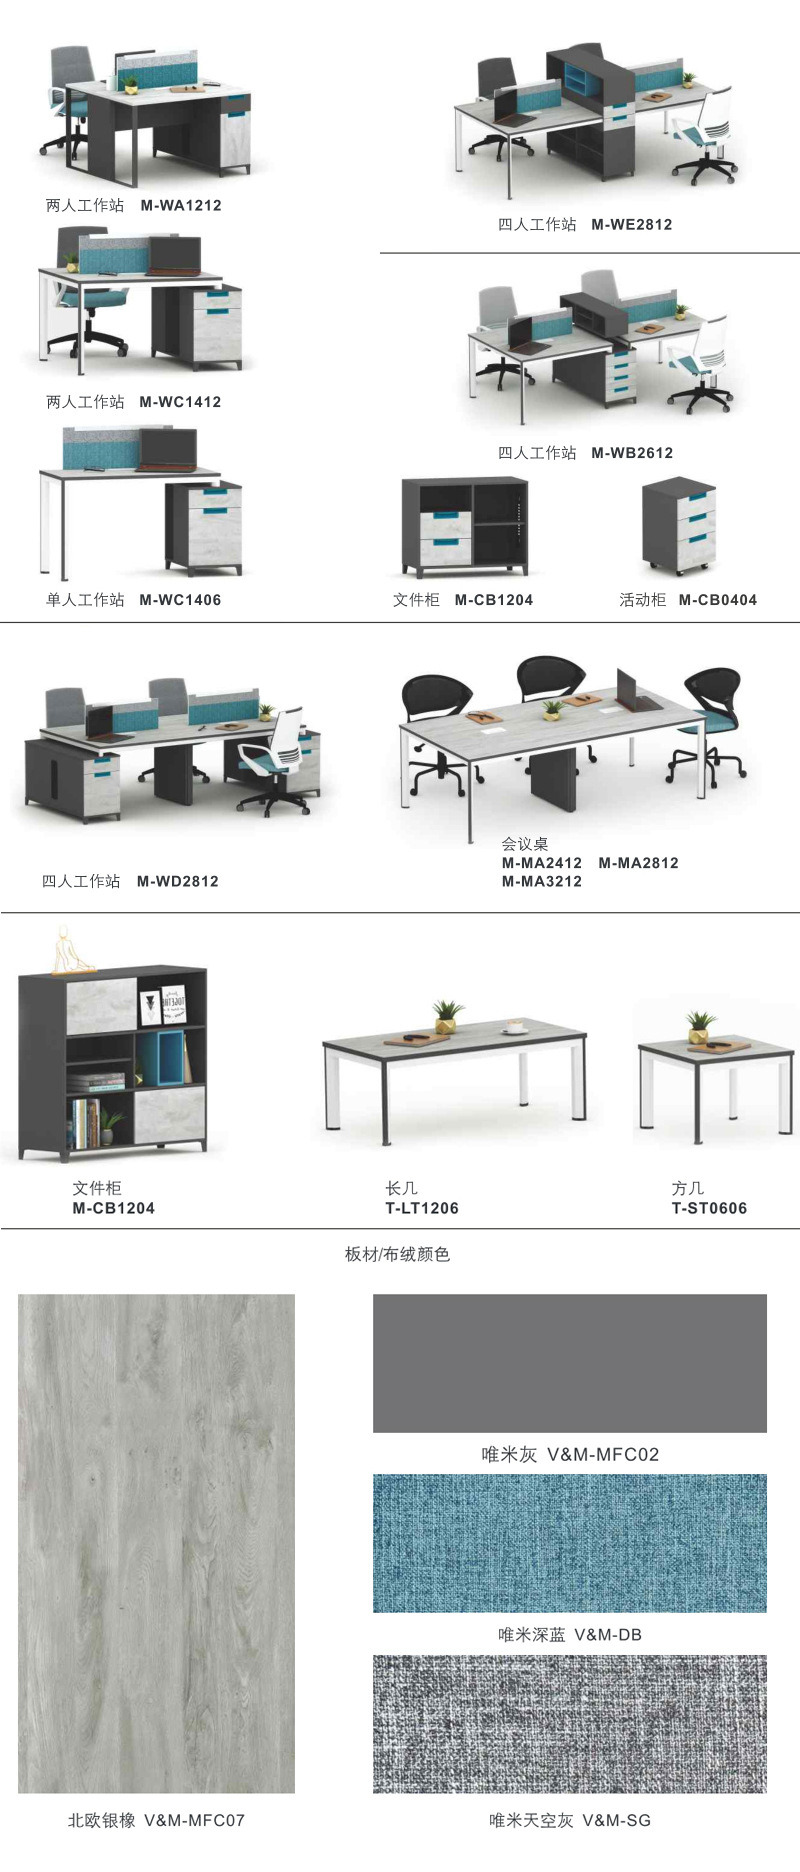 M-Ma2412 Various Design Melamine Office Meeting Table